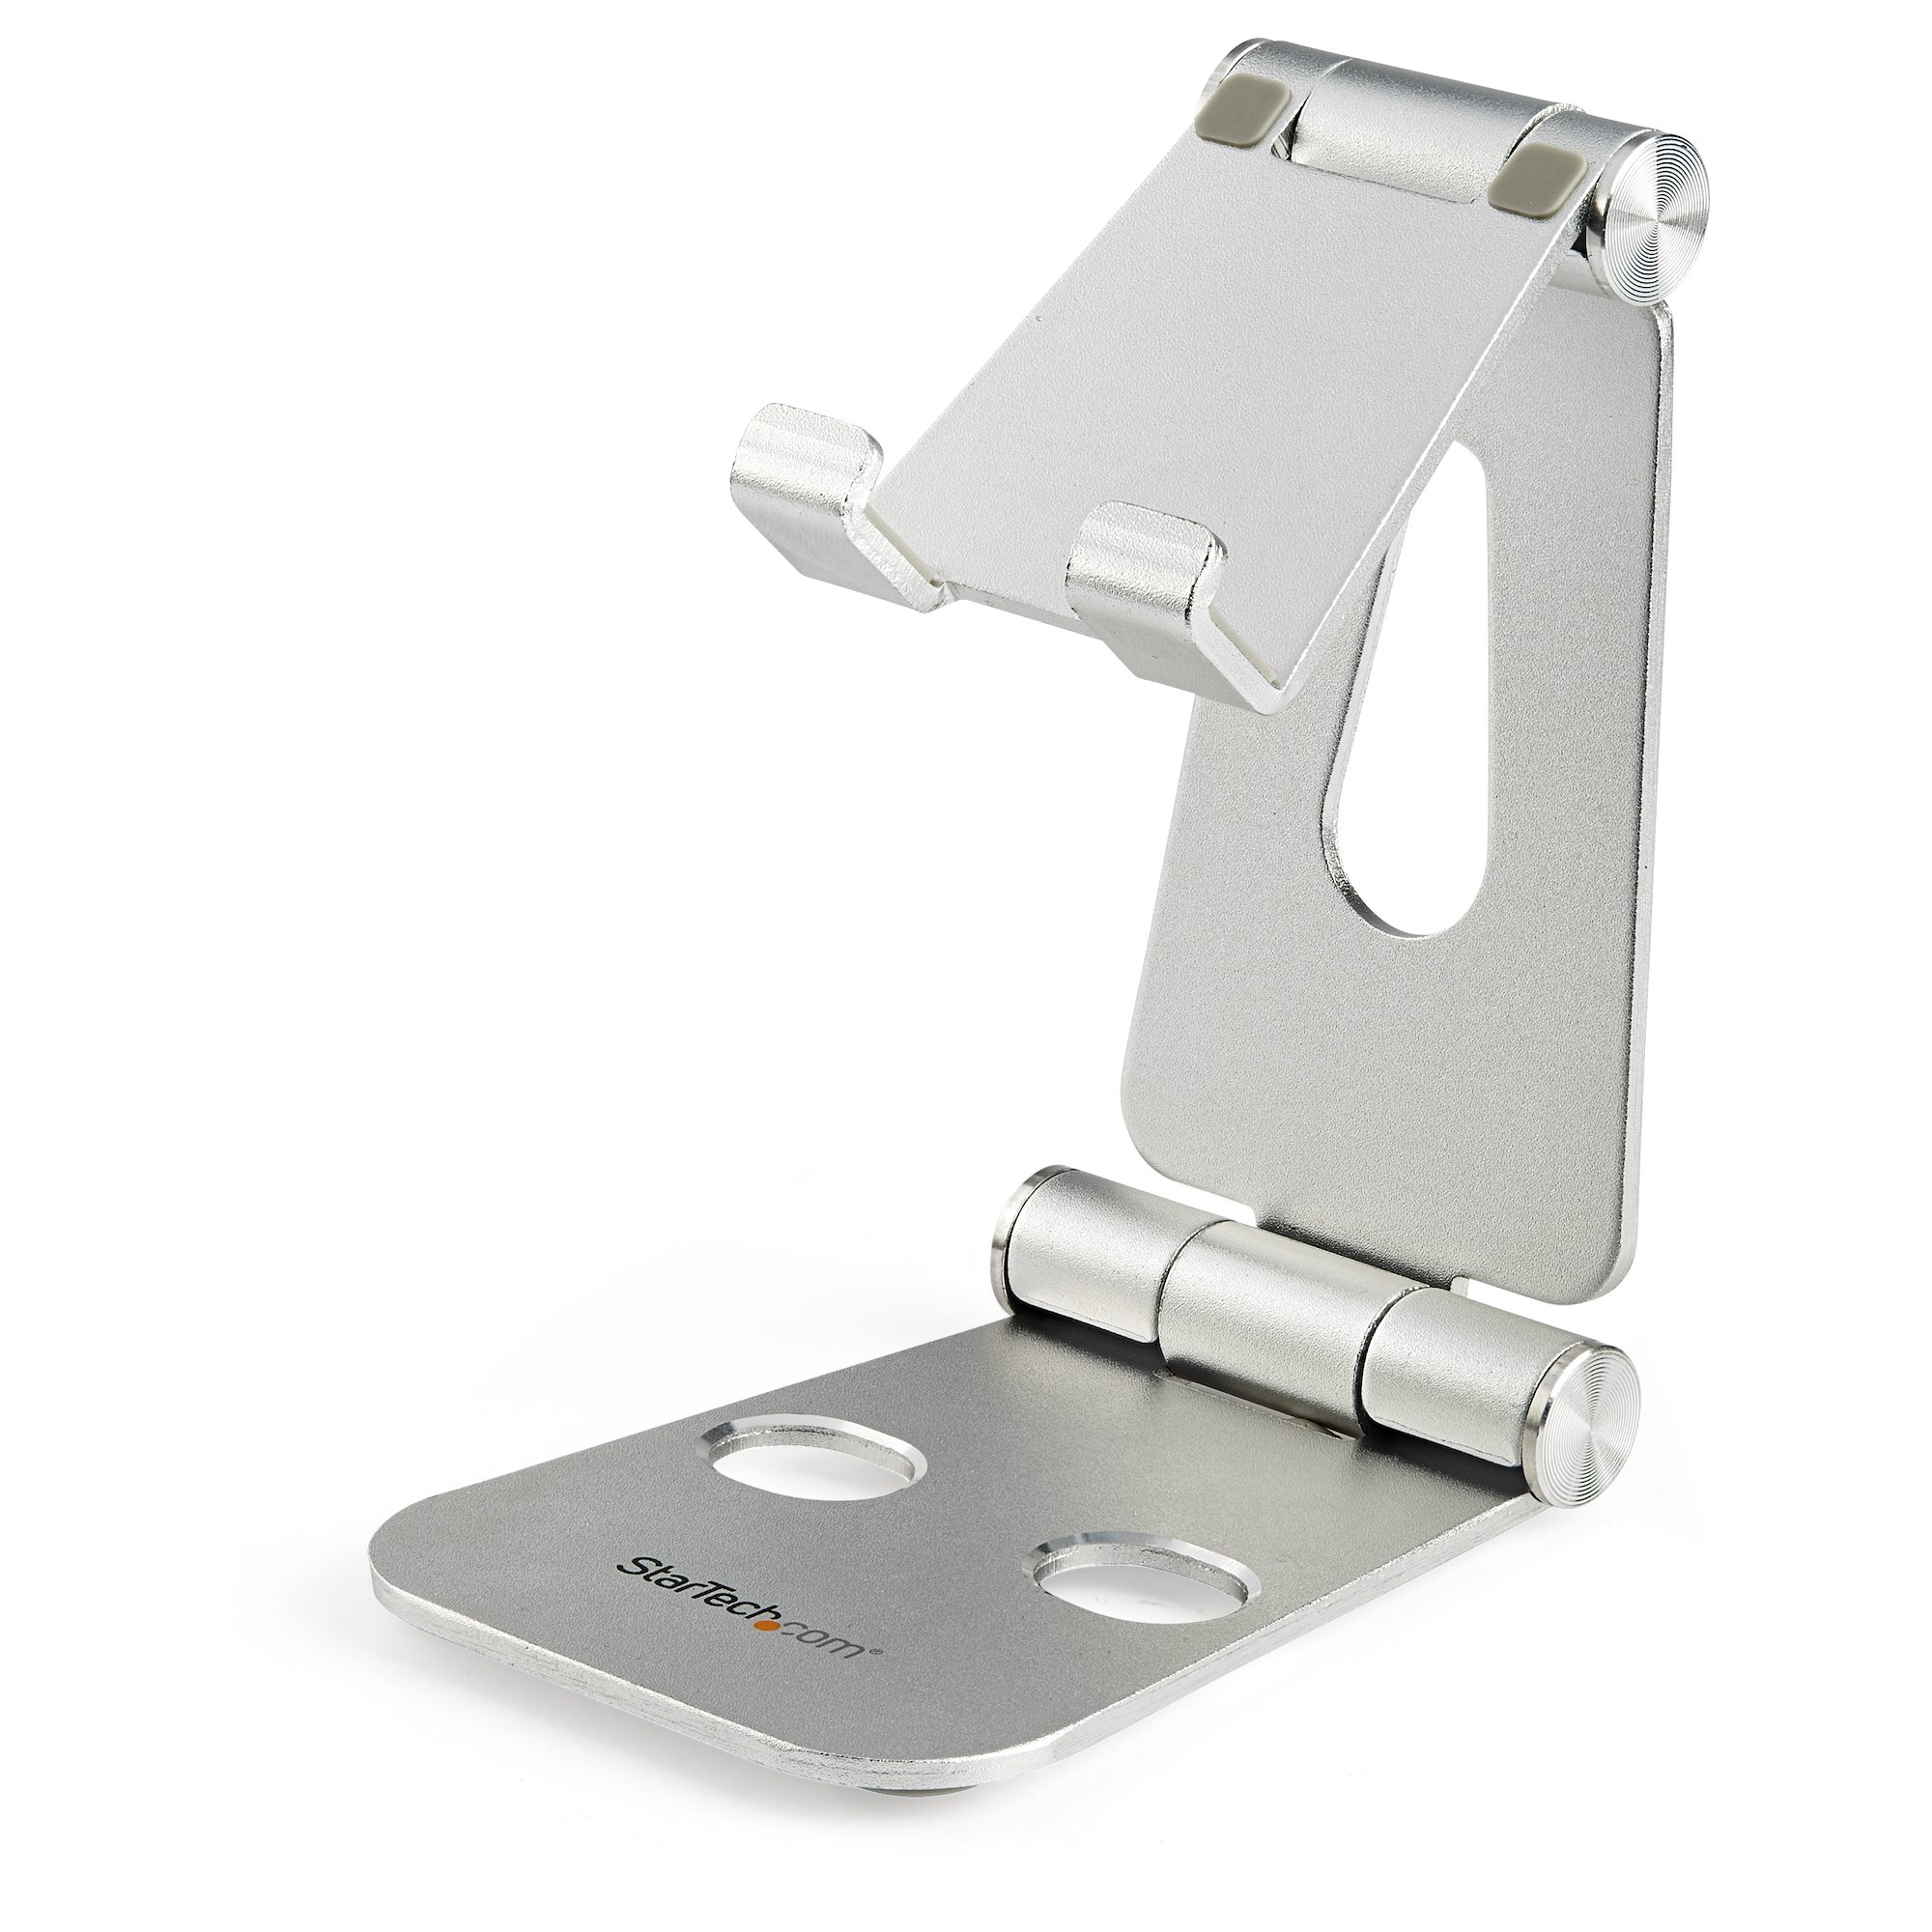 1 Universal Aluminum Cell Phone Desk Desktop Mount Stand Holder For Phone Tablet